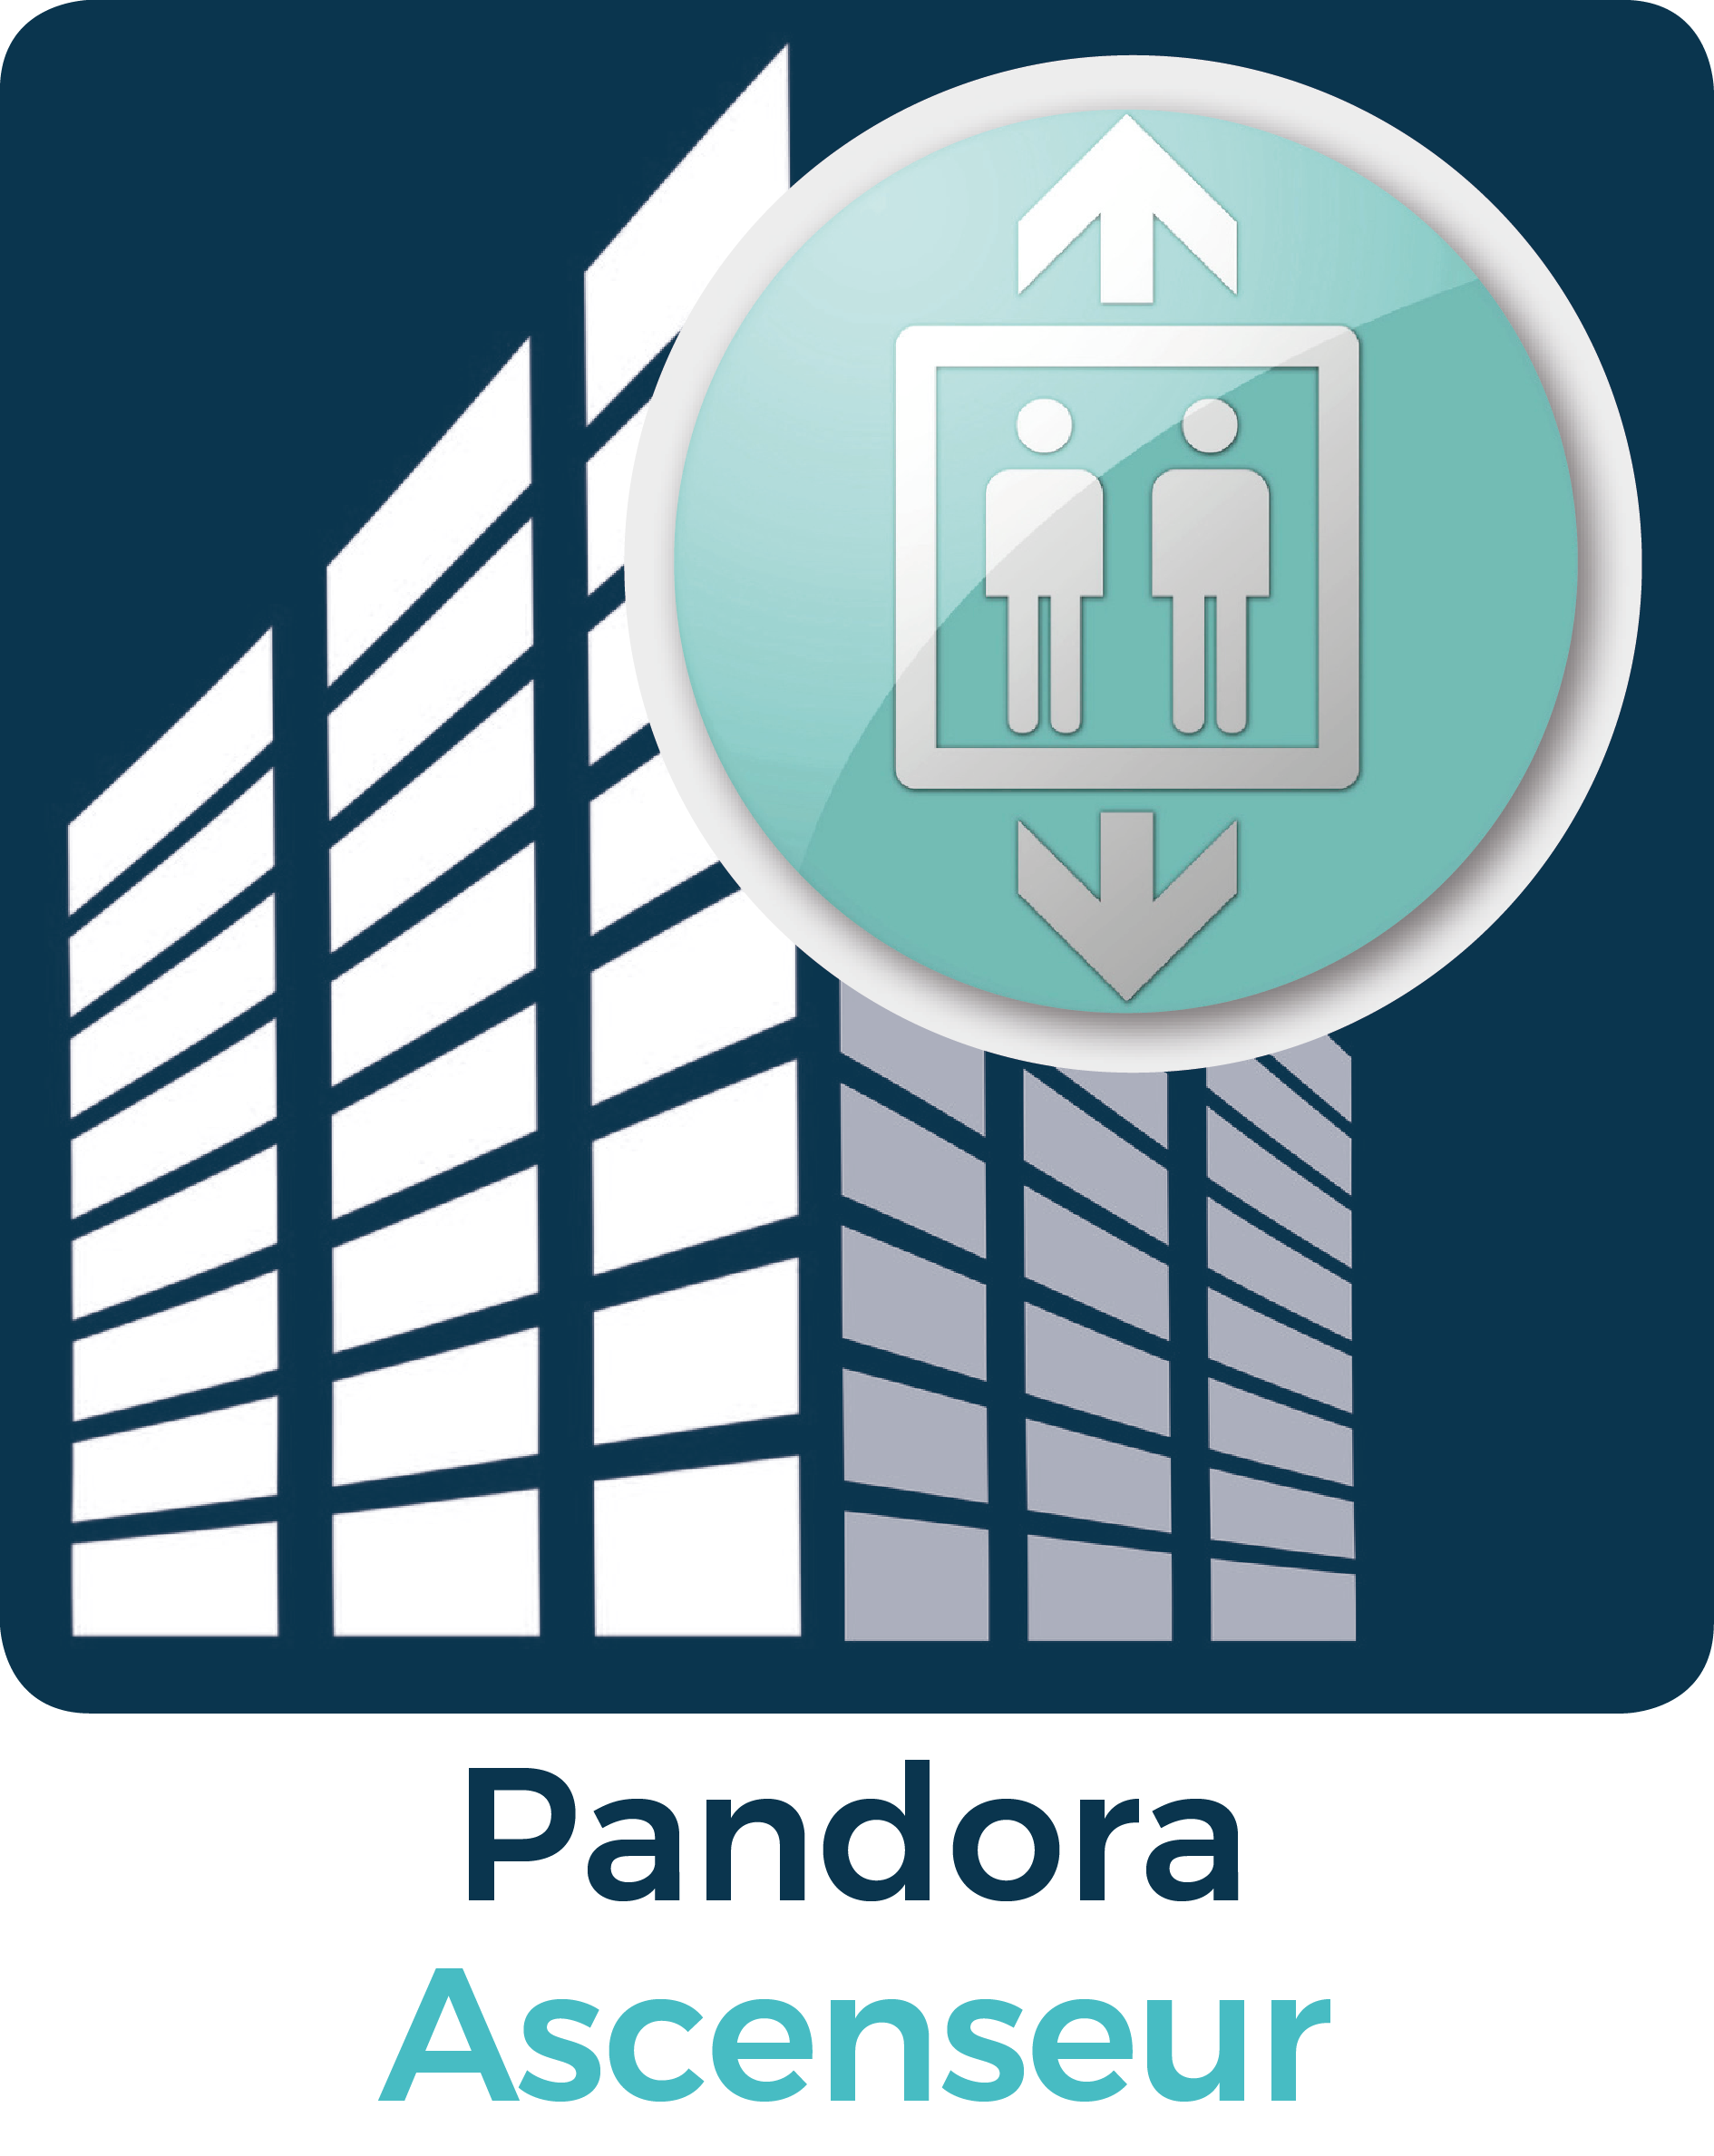 Pandora Ascenseur